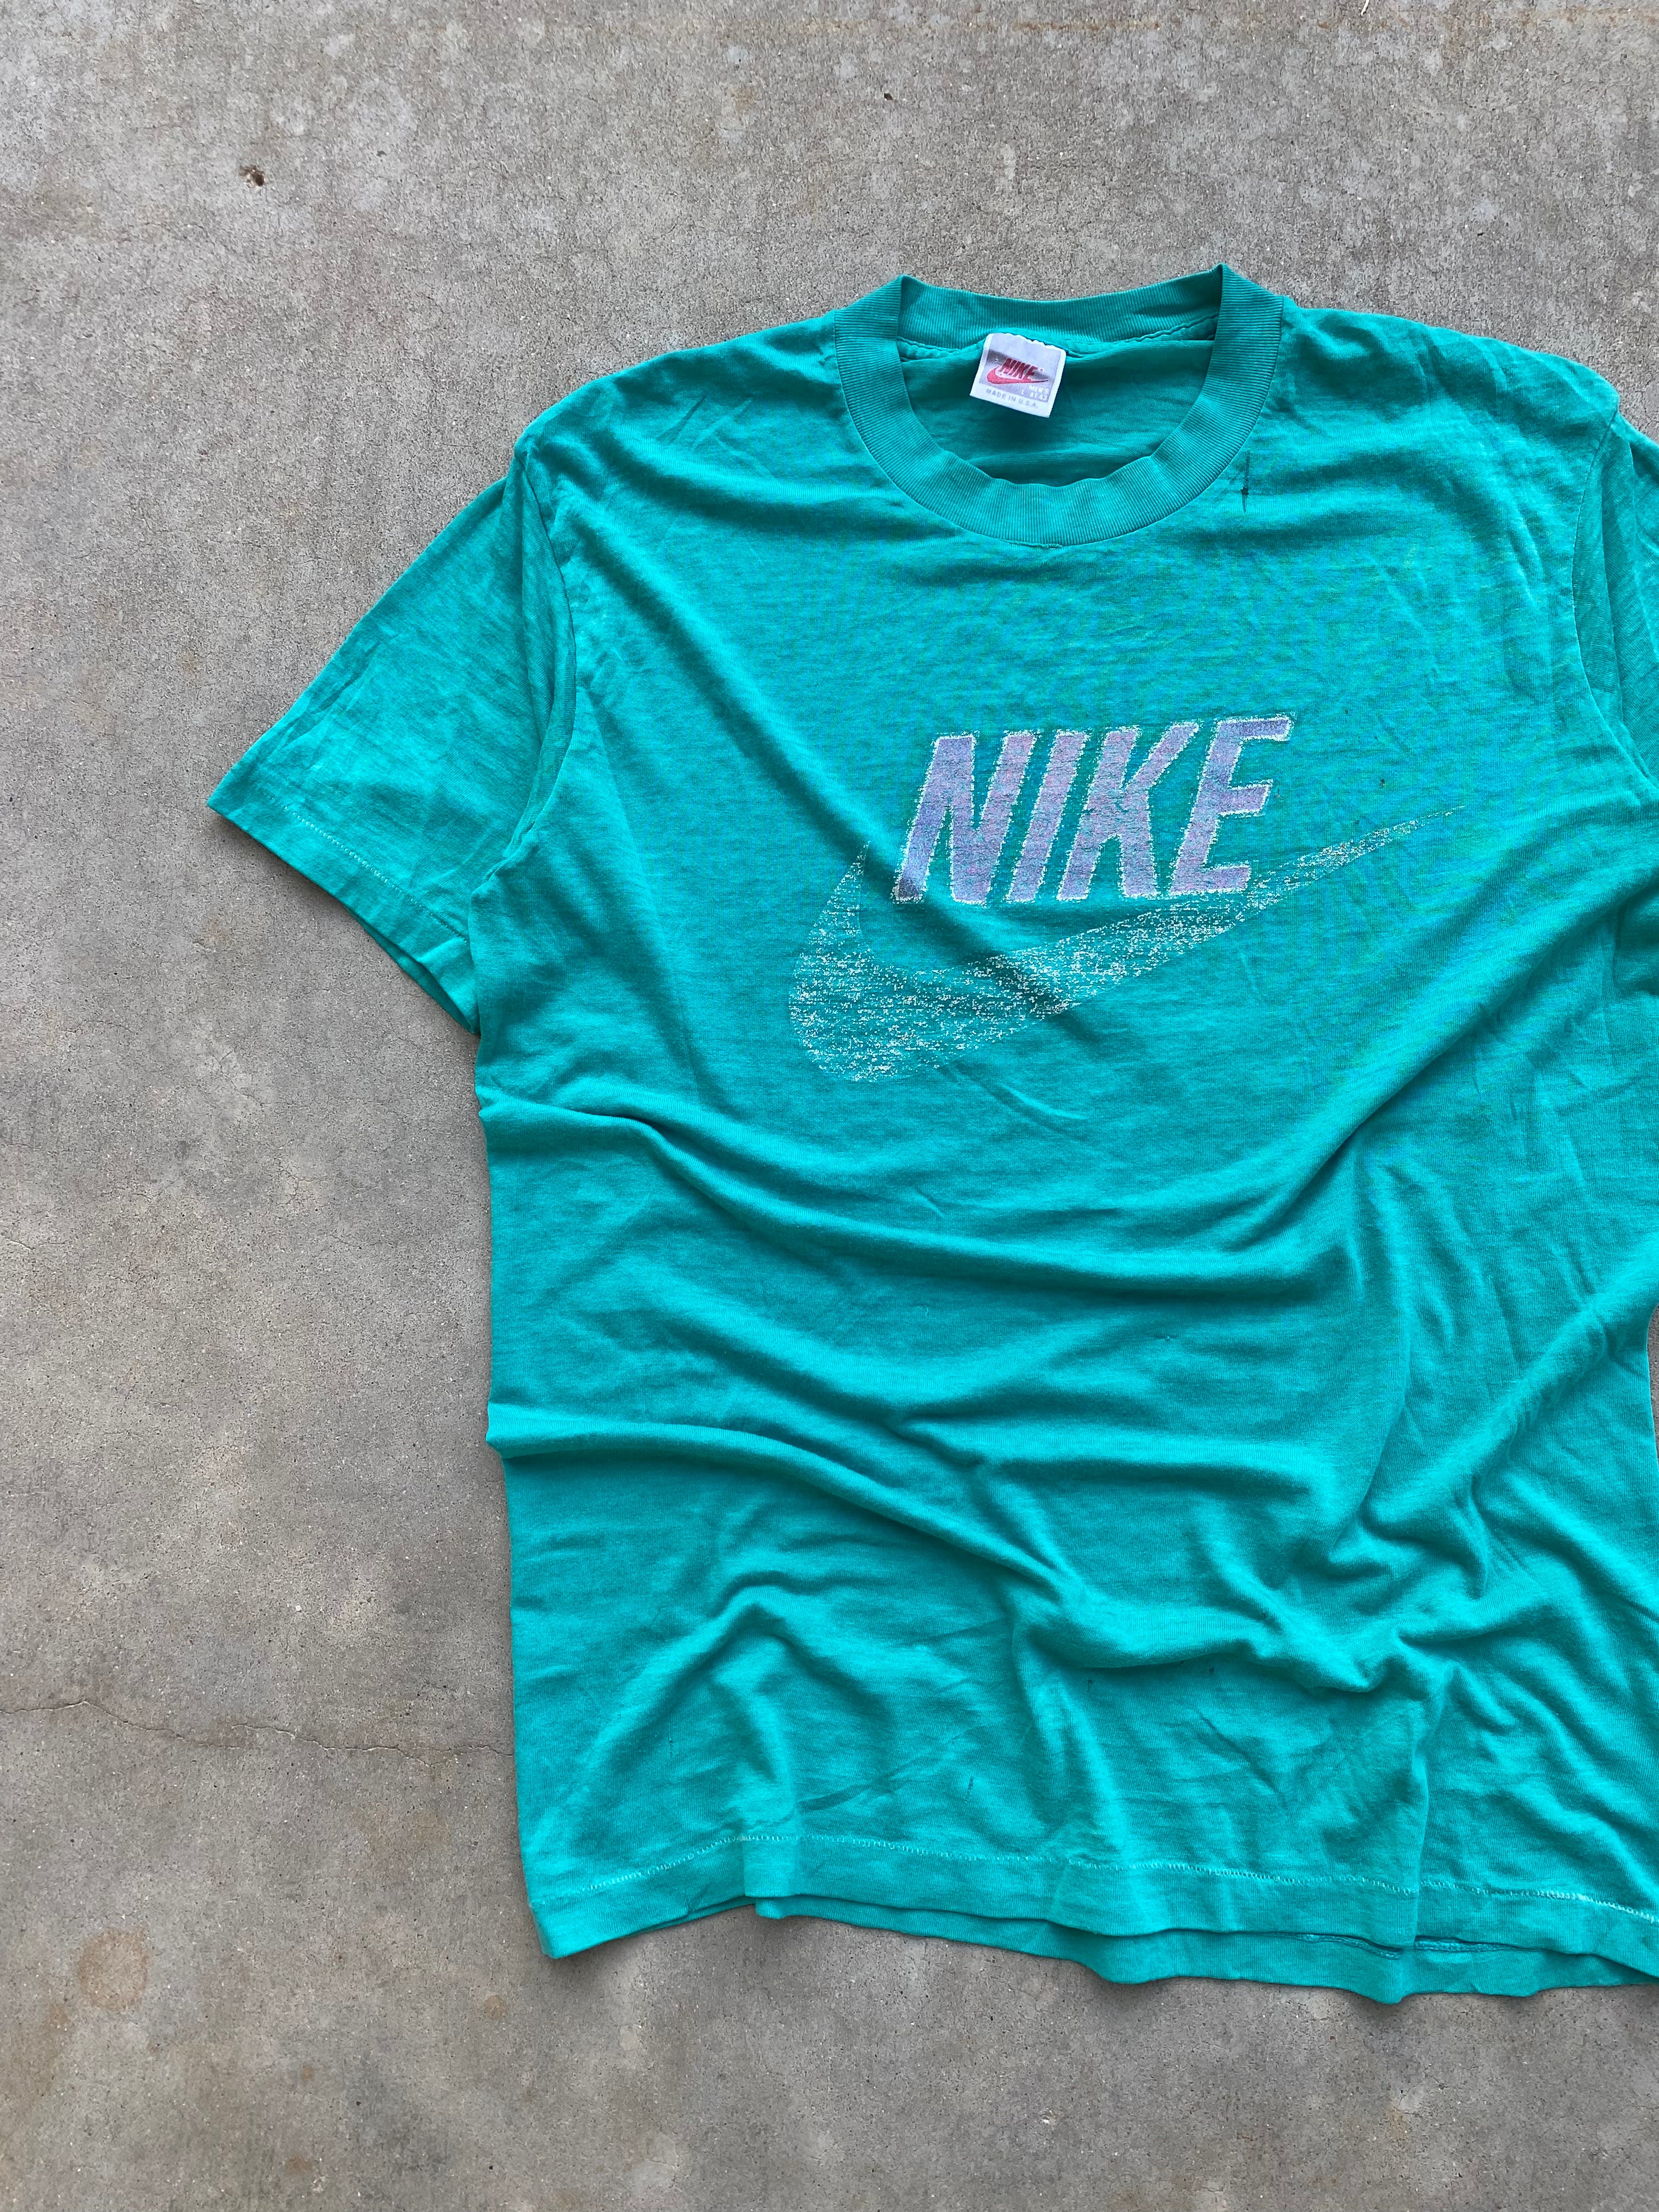 1980s Faded/Thin Nike T-Shirt (M)